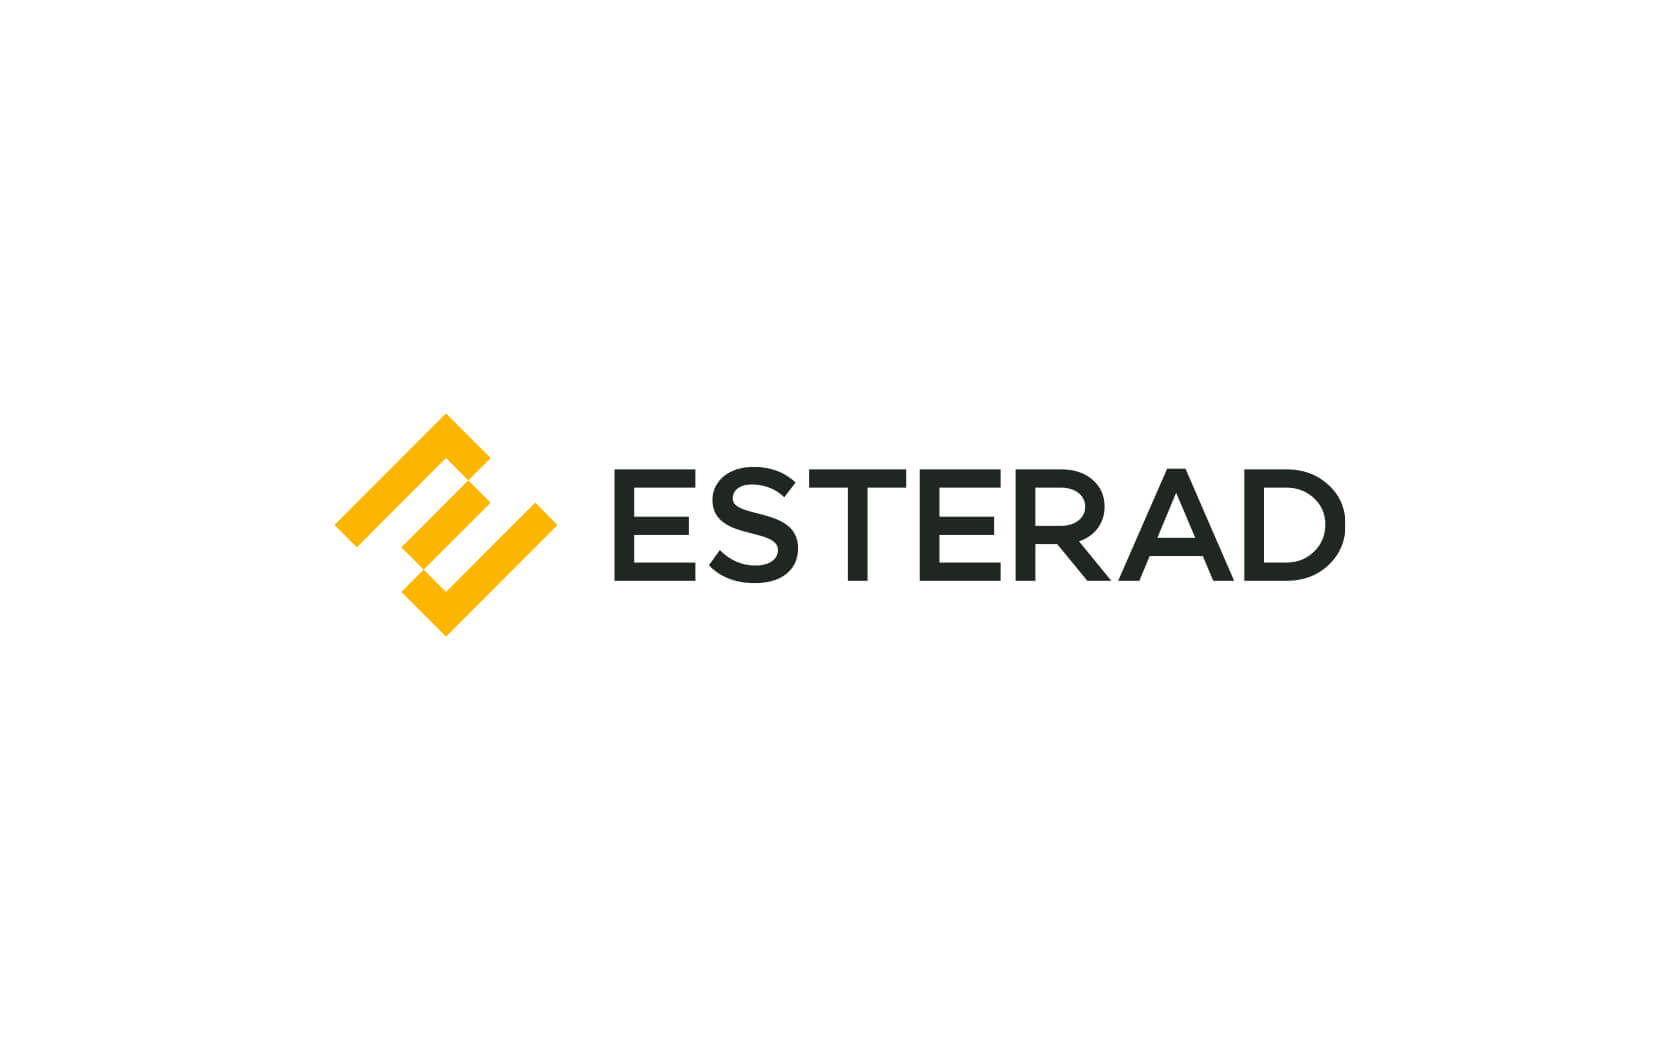 Esterad. Brand logo on white background